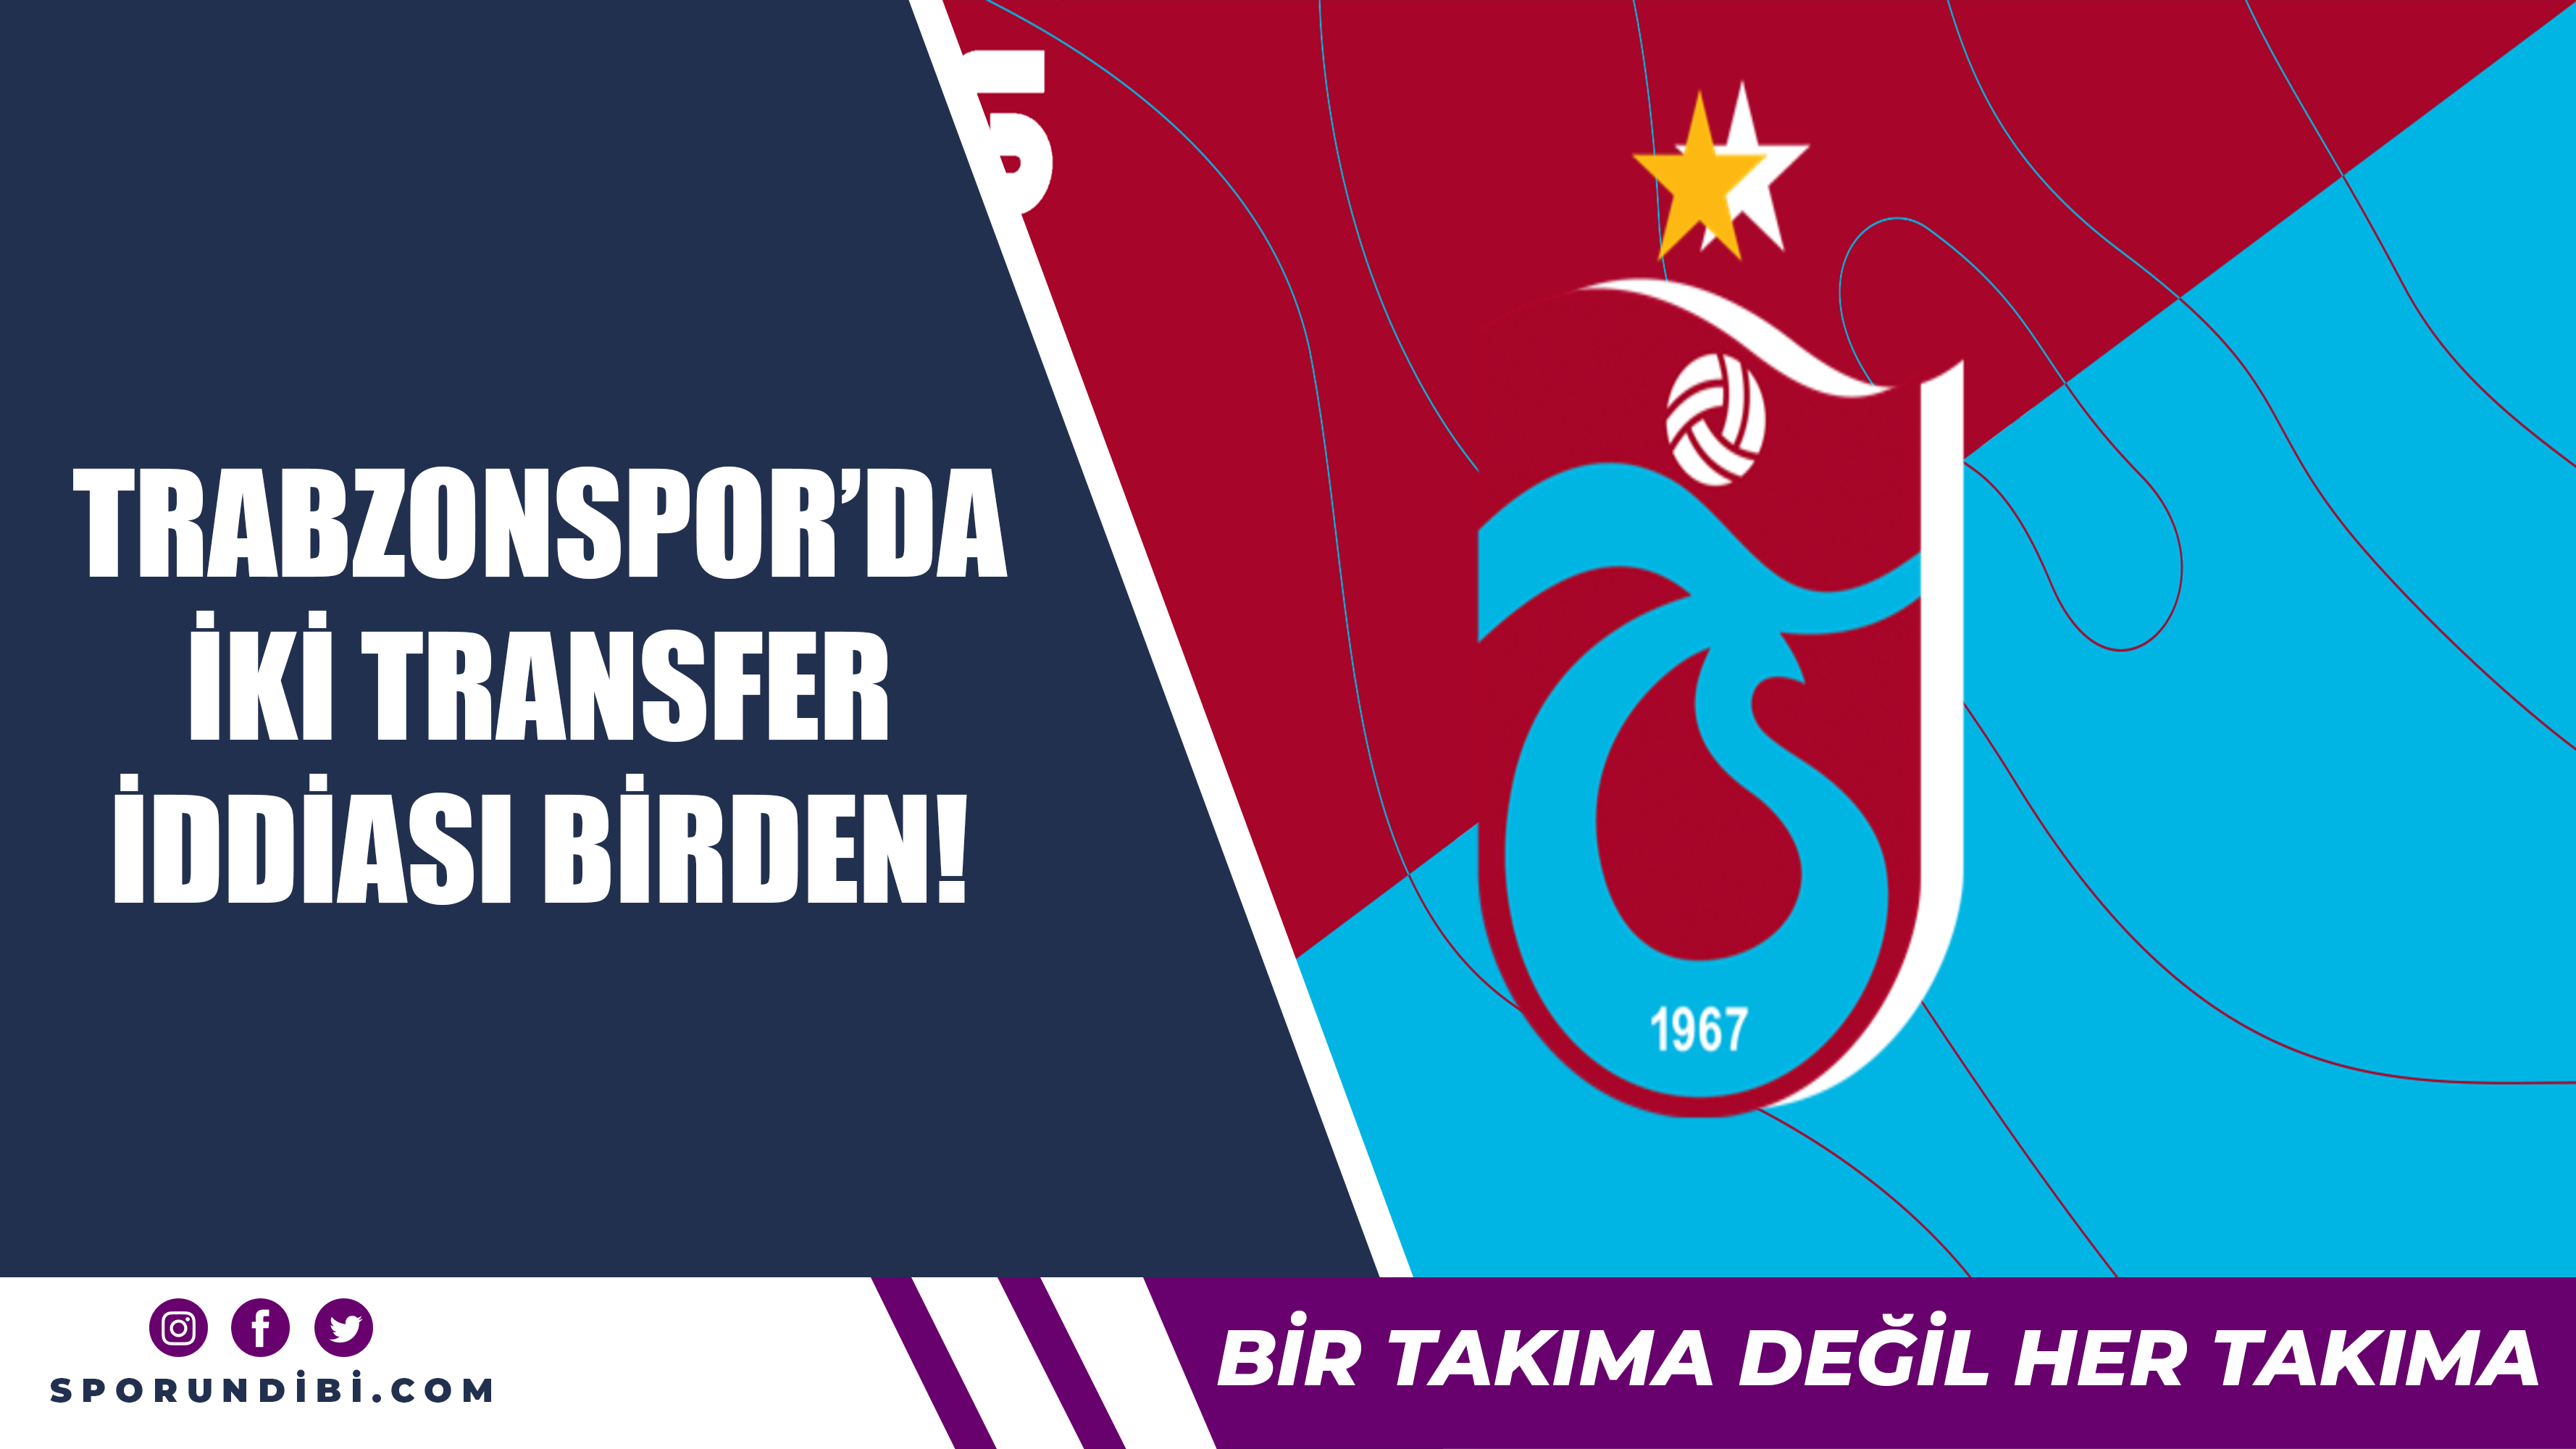 Trabzonspor'da iki transfer iddiası birden!